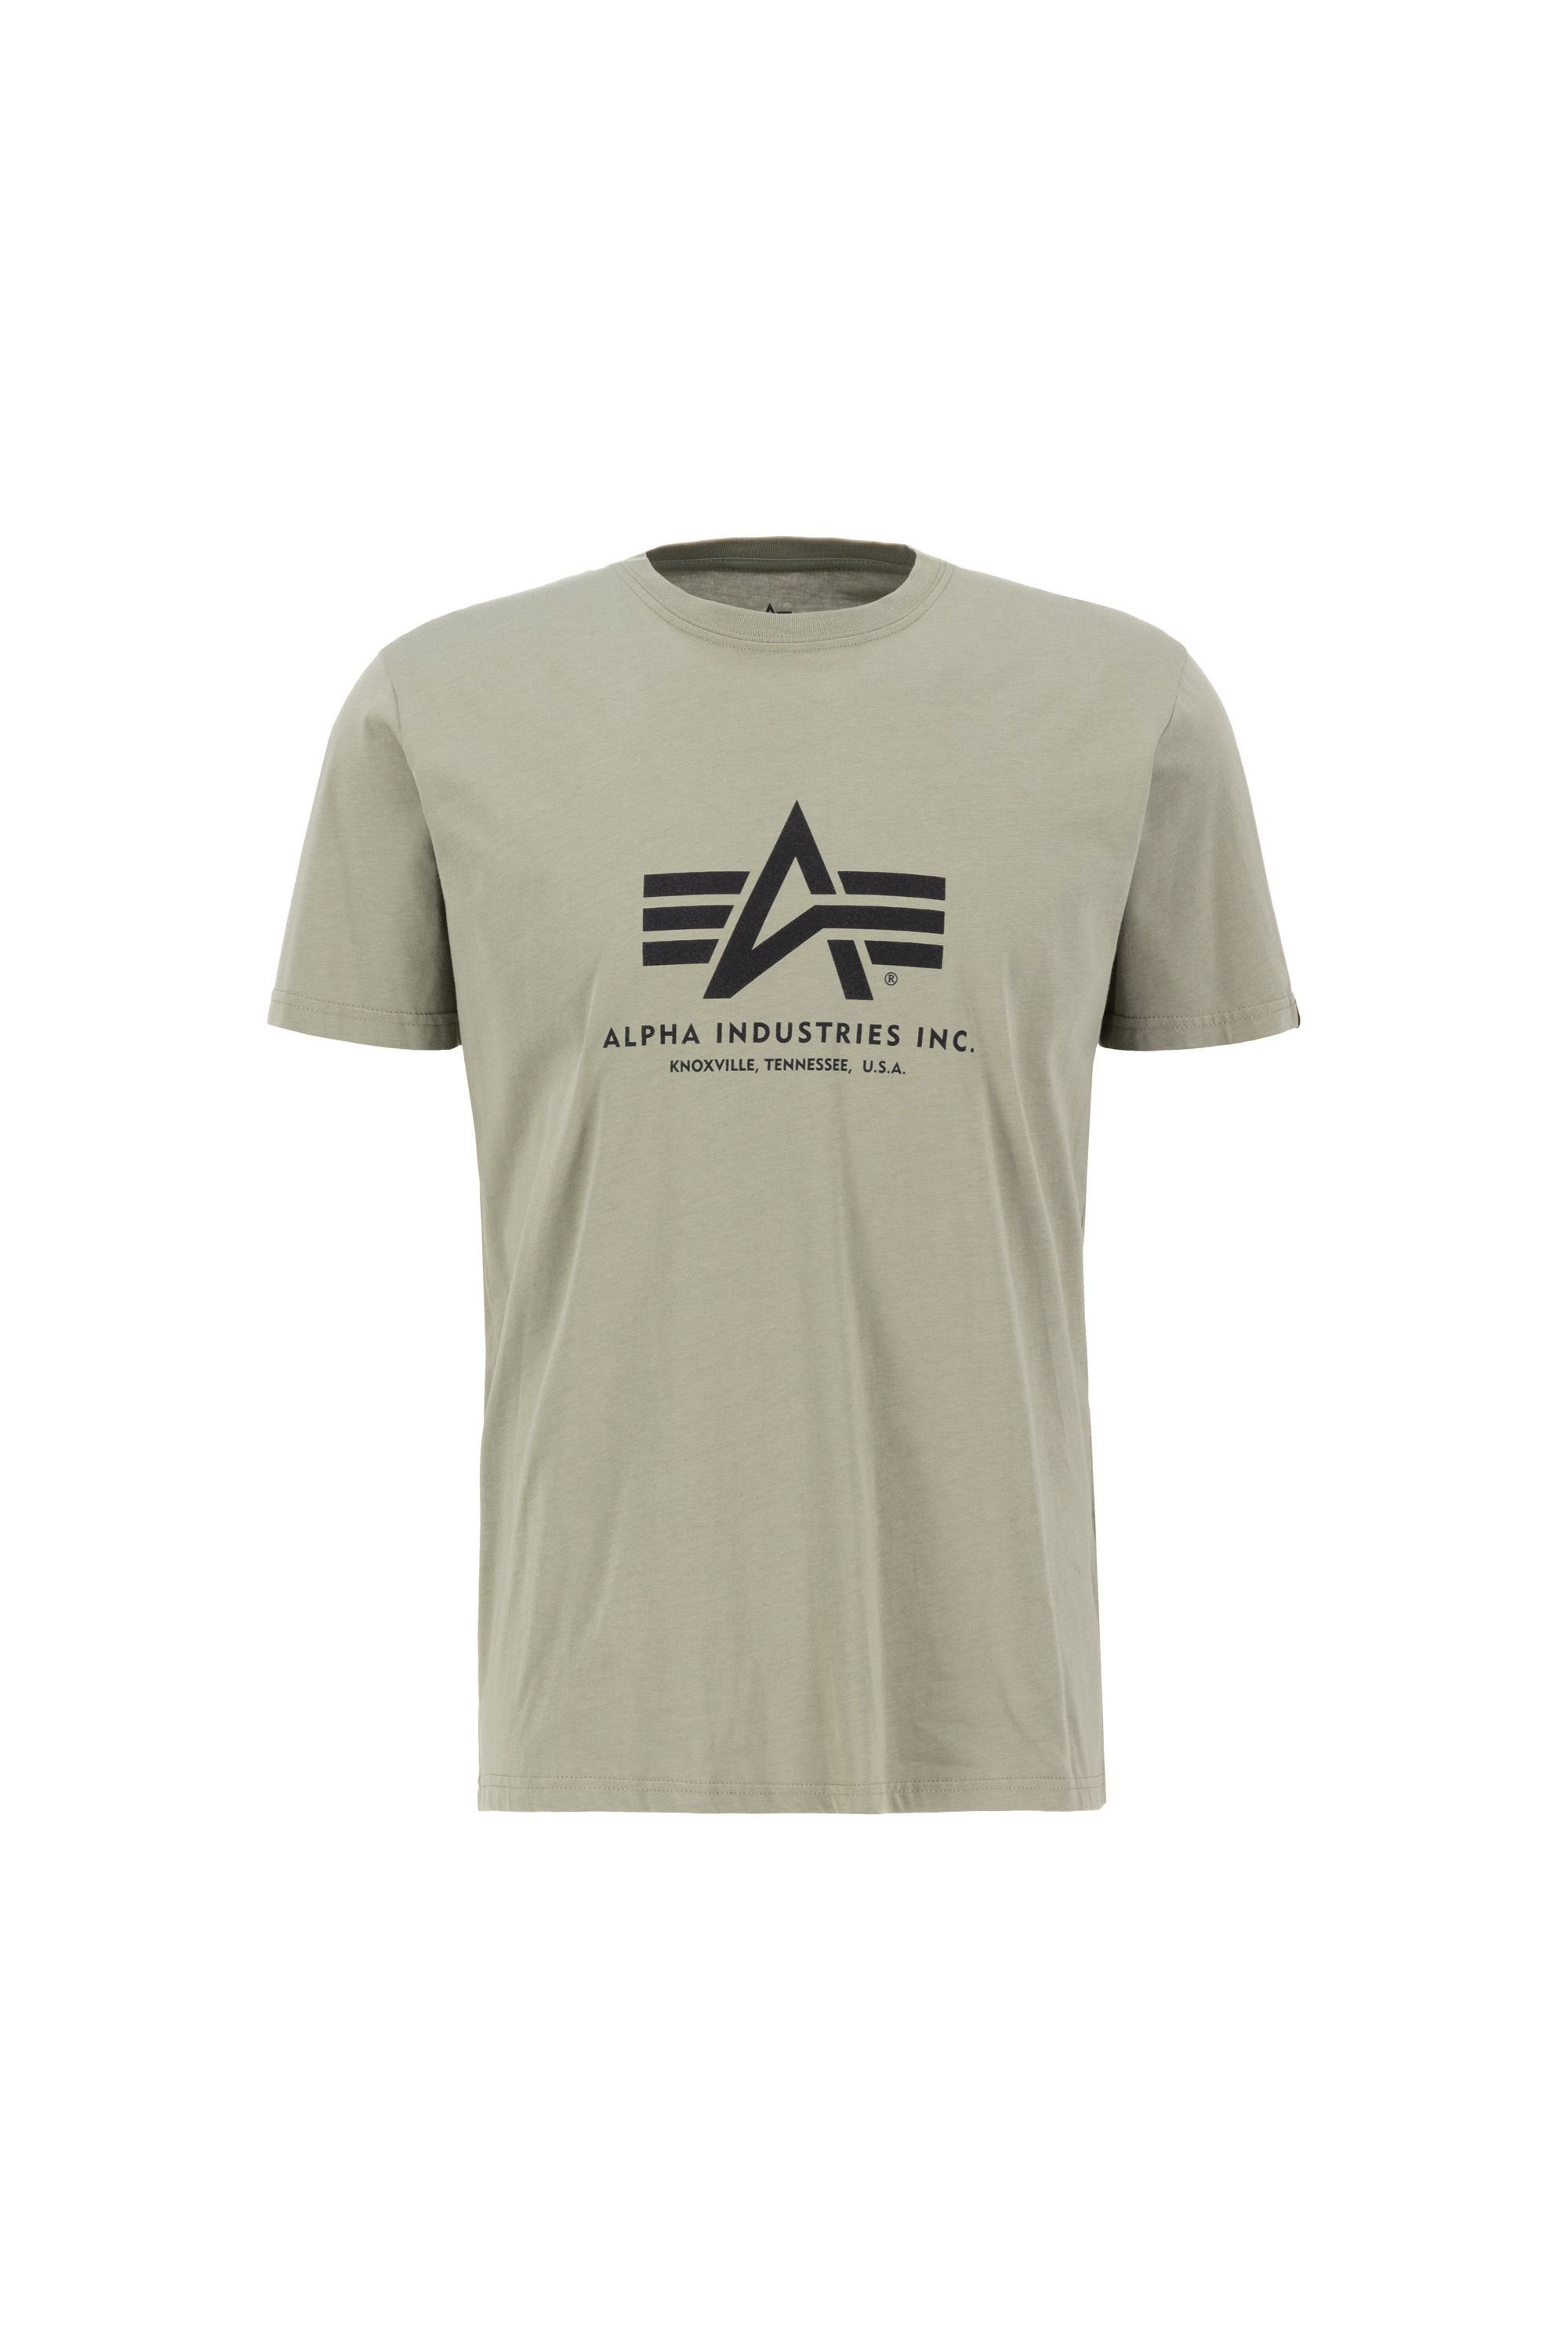 Alpha Industries T-Shirt olive